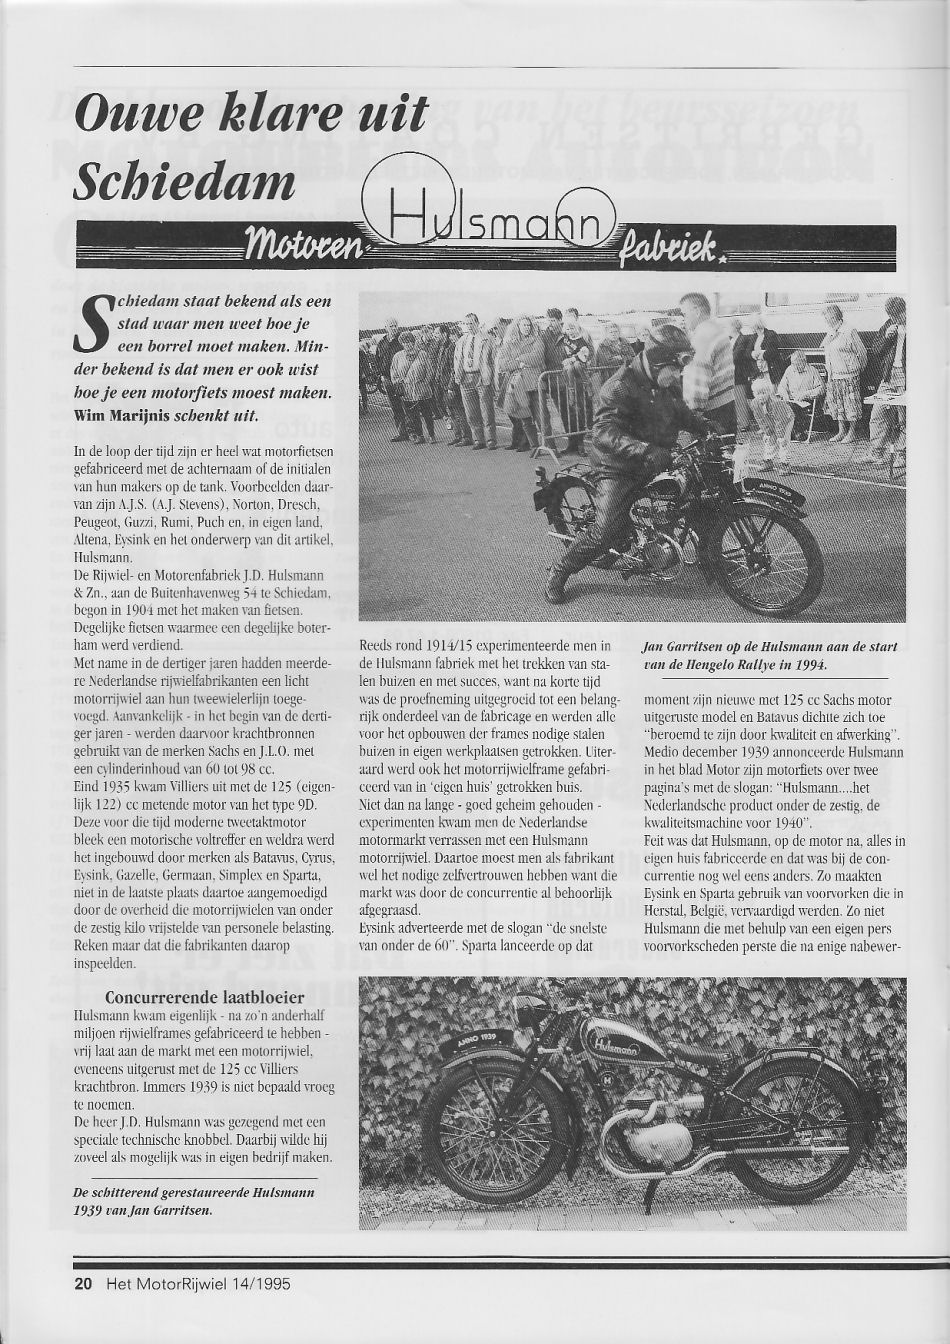 Over Hulsmann - Het Motorrijwiel nr. 14 1995